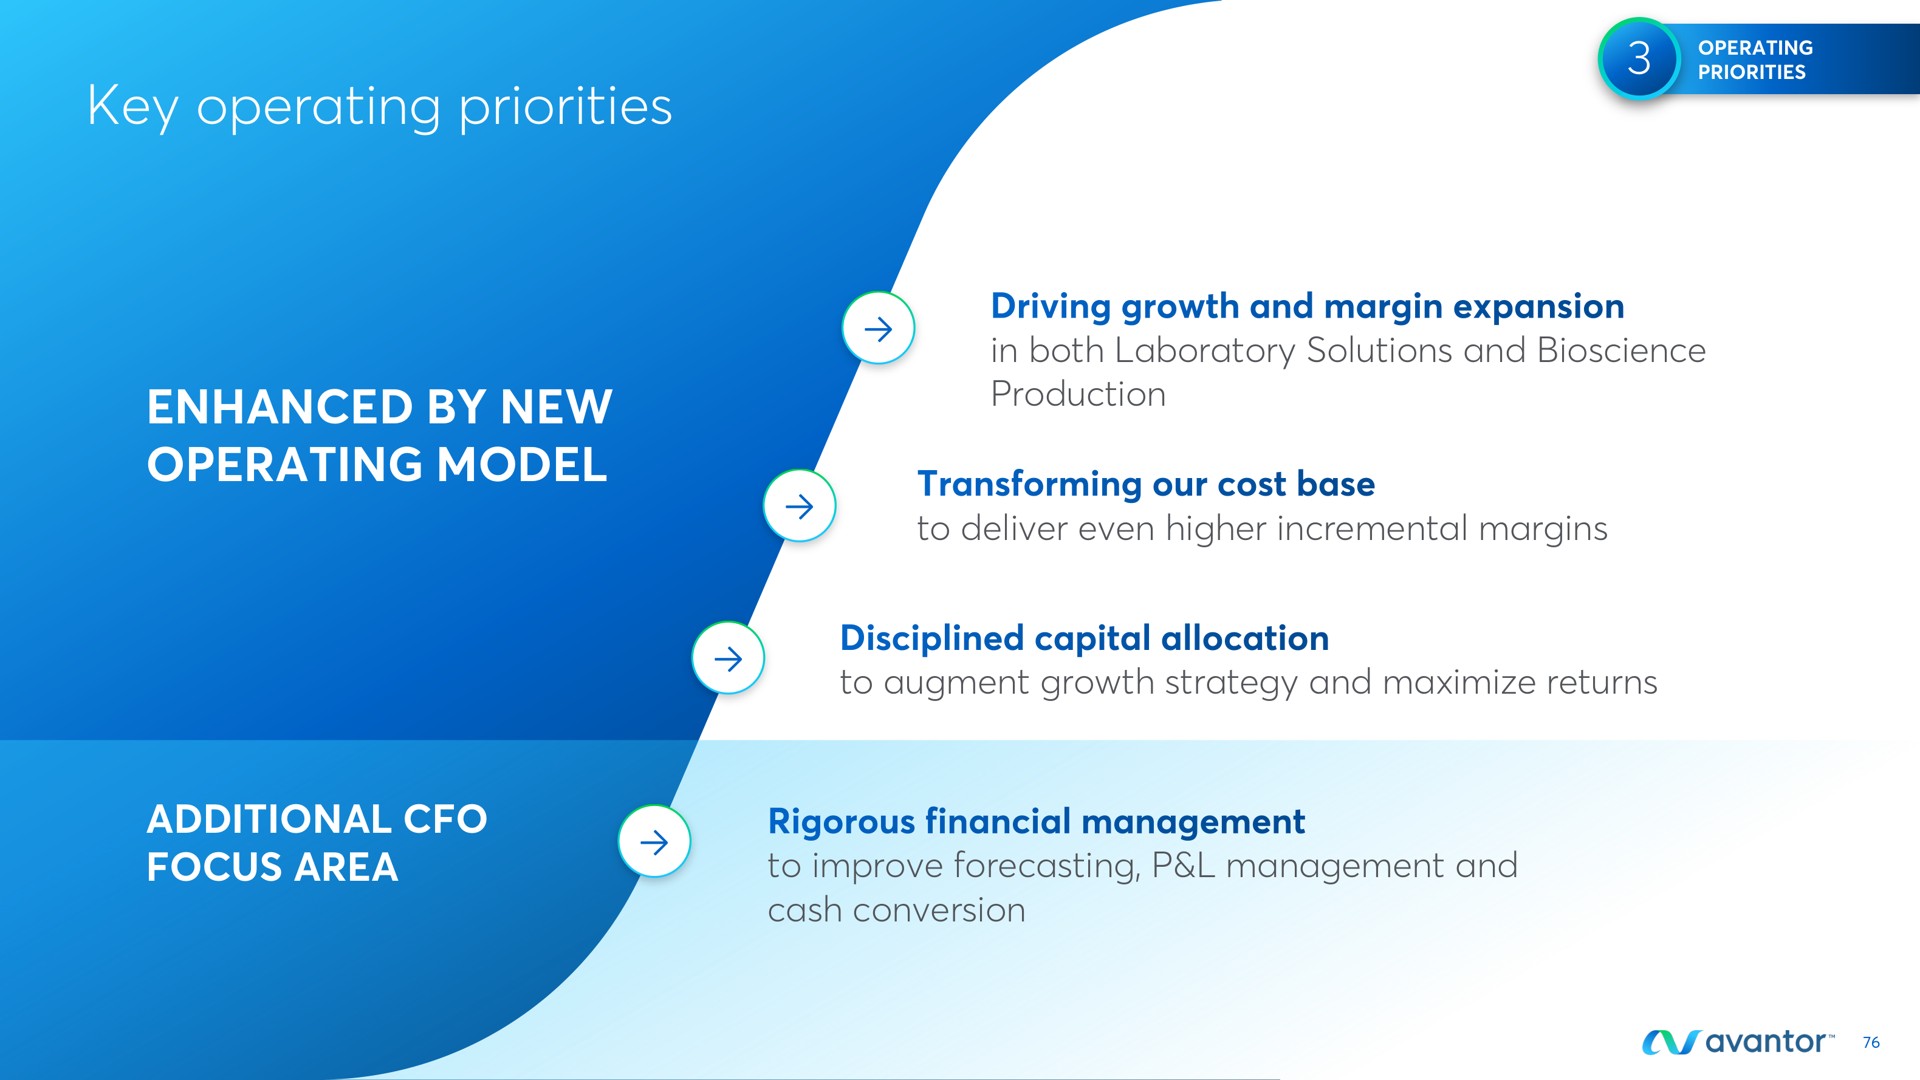 key operating priorities enhanced by new operating model production | Avantor